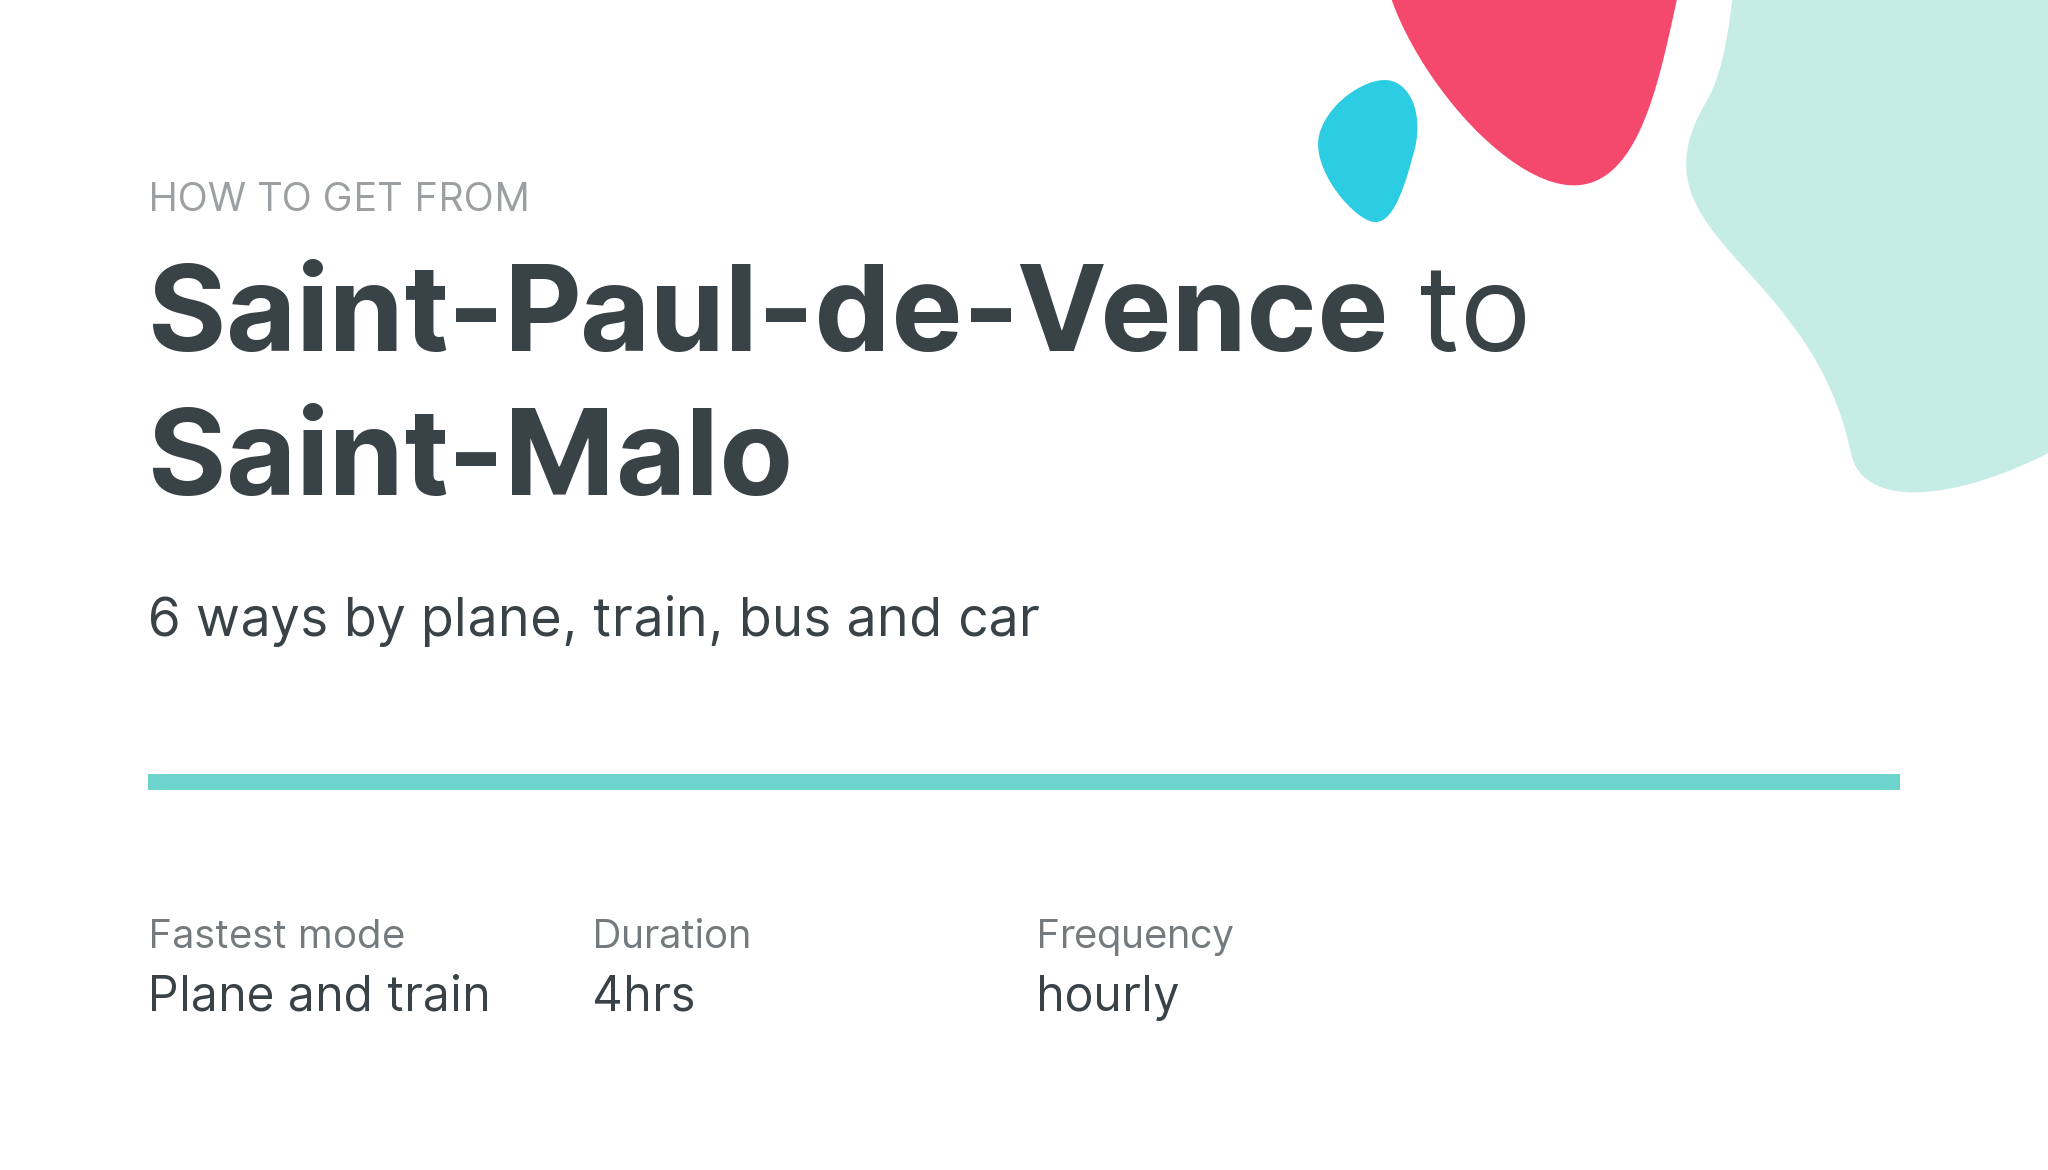 How do I get from Saint-Paul-de-Vence to Saint-Malo